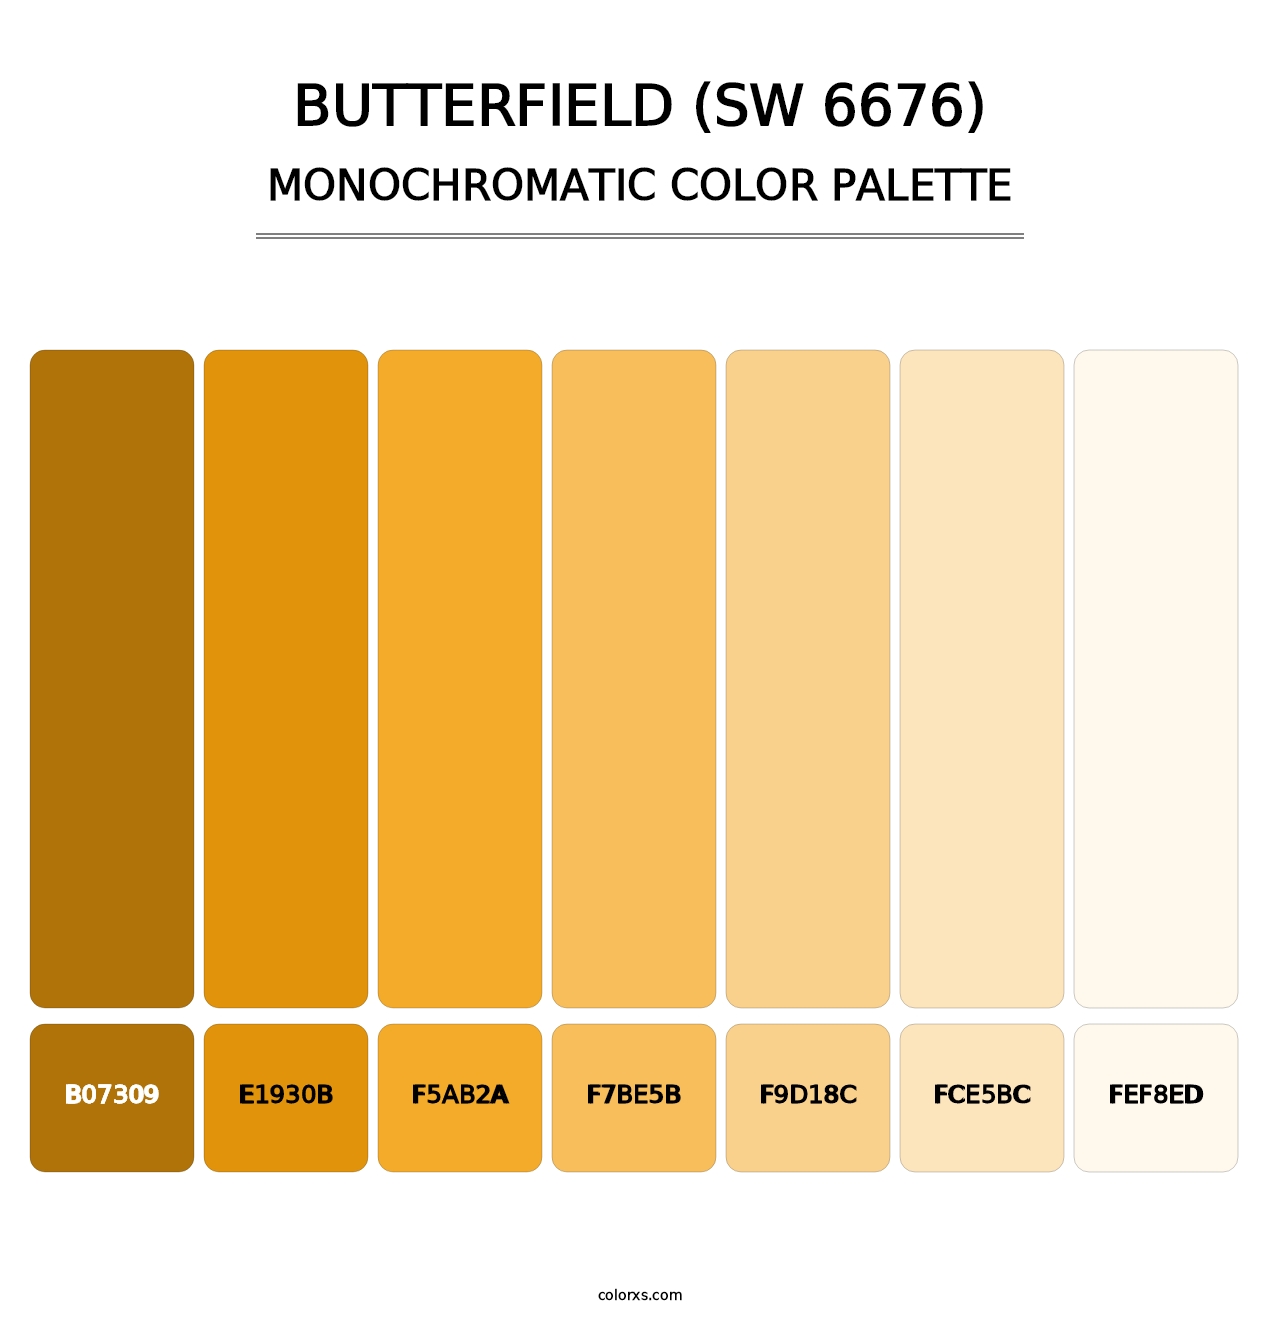 Butterfield (SW 6676) - Monochromatic Color Palette